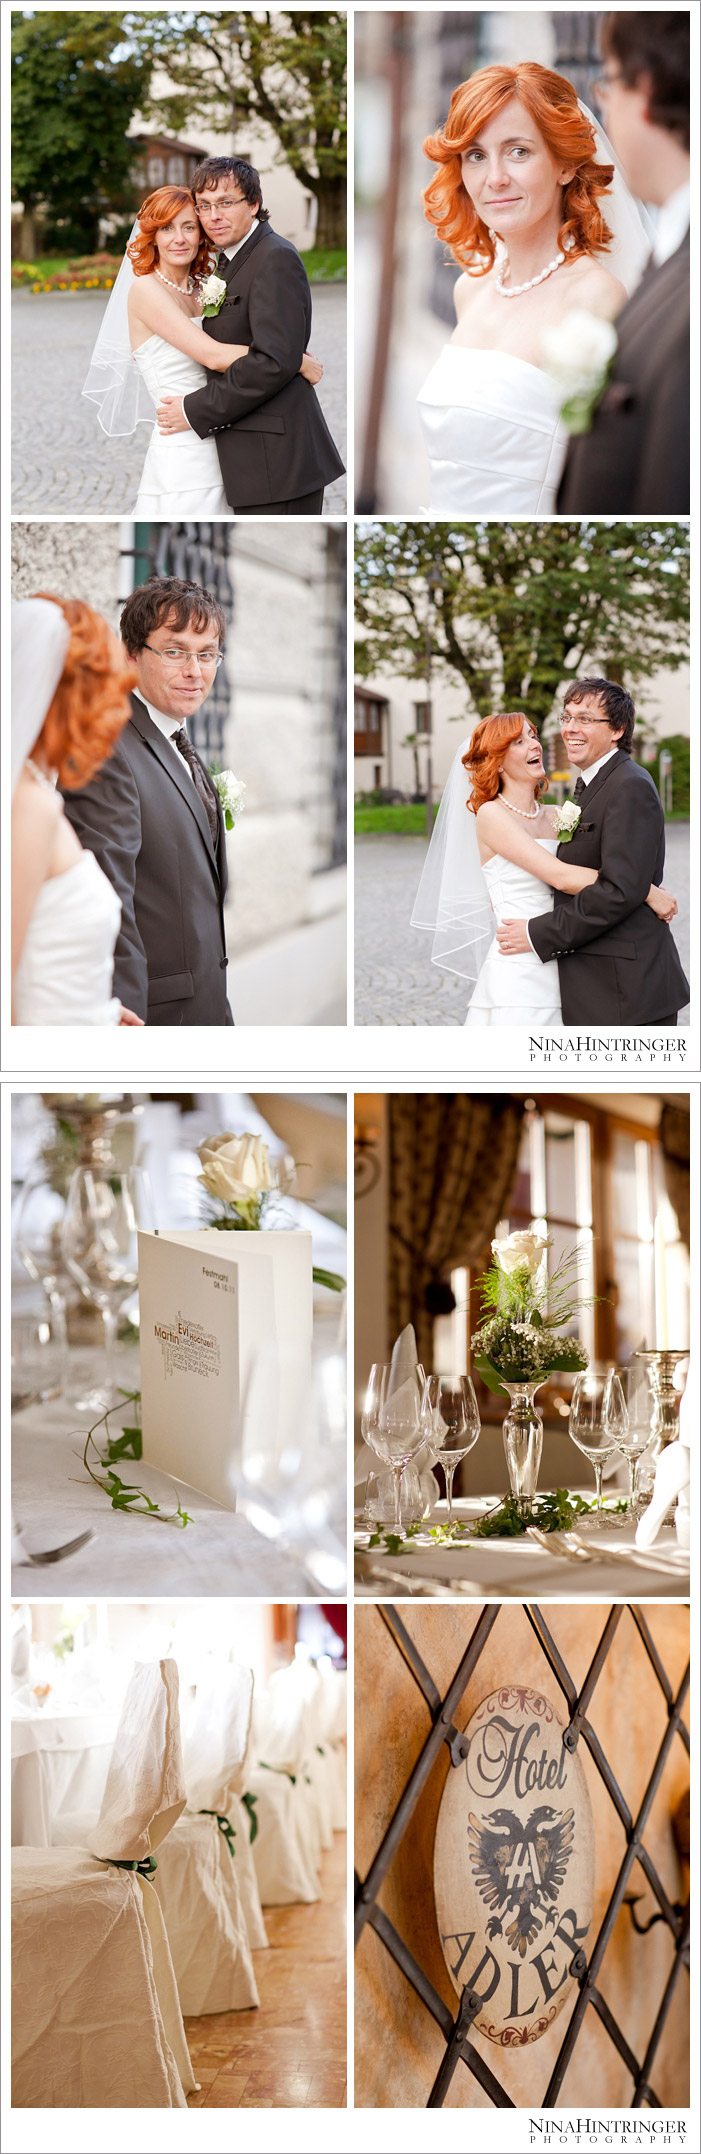 Evi & Martin | Gorgeous wedding at freezing temperatures | South Tyrol, Italy - Blog of Nina Hintringer Photography - Wedding Photography, Wedding Reportage and Destination Weddings